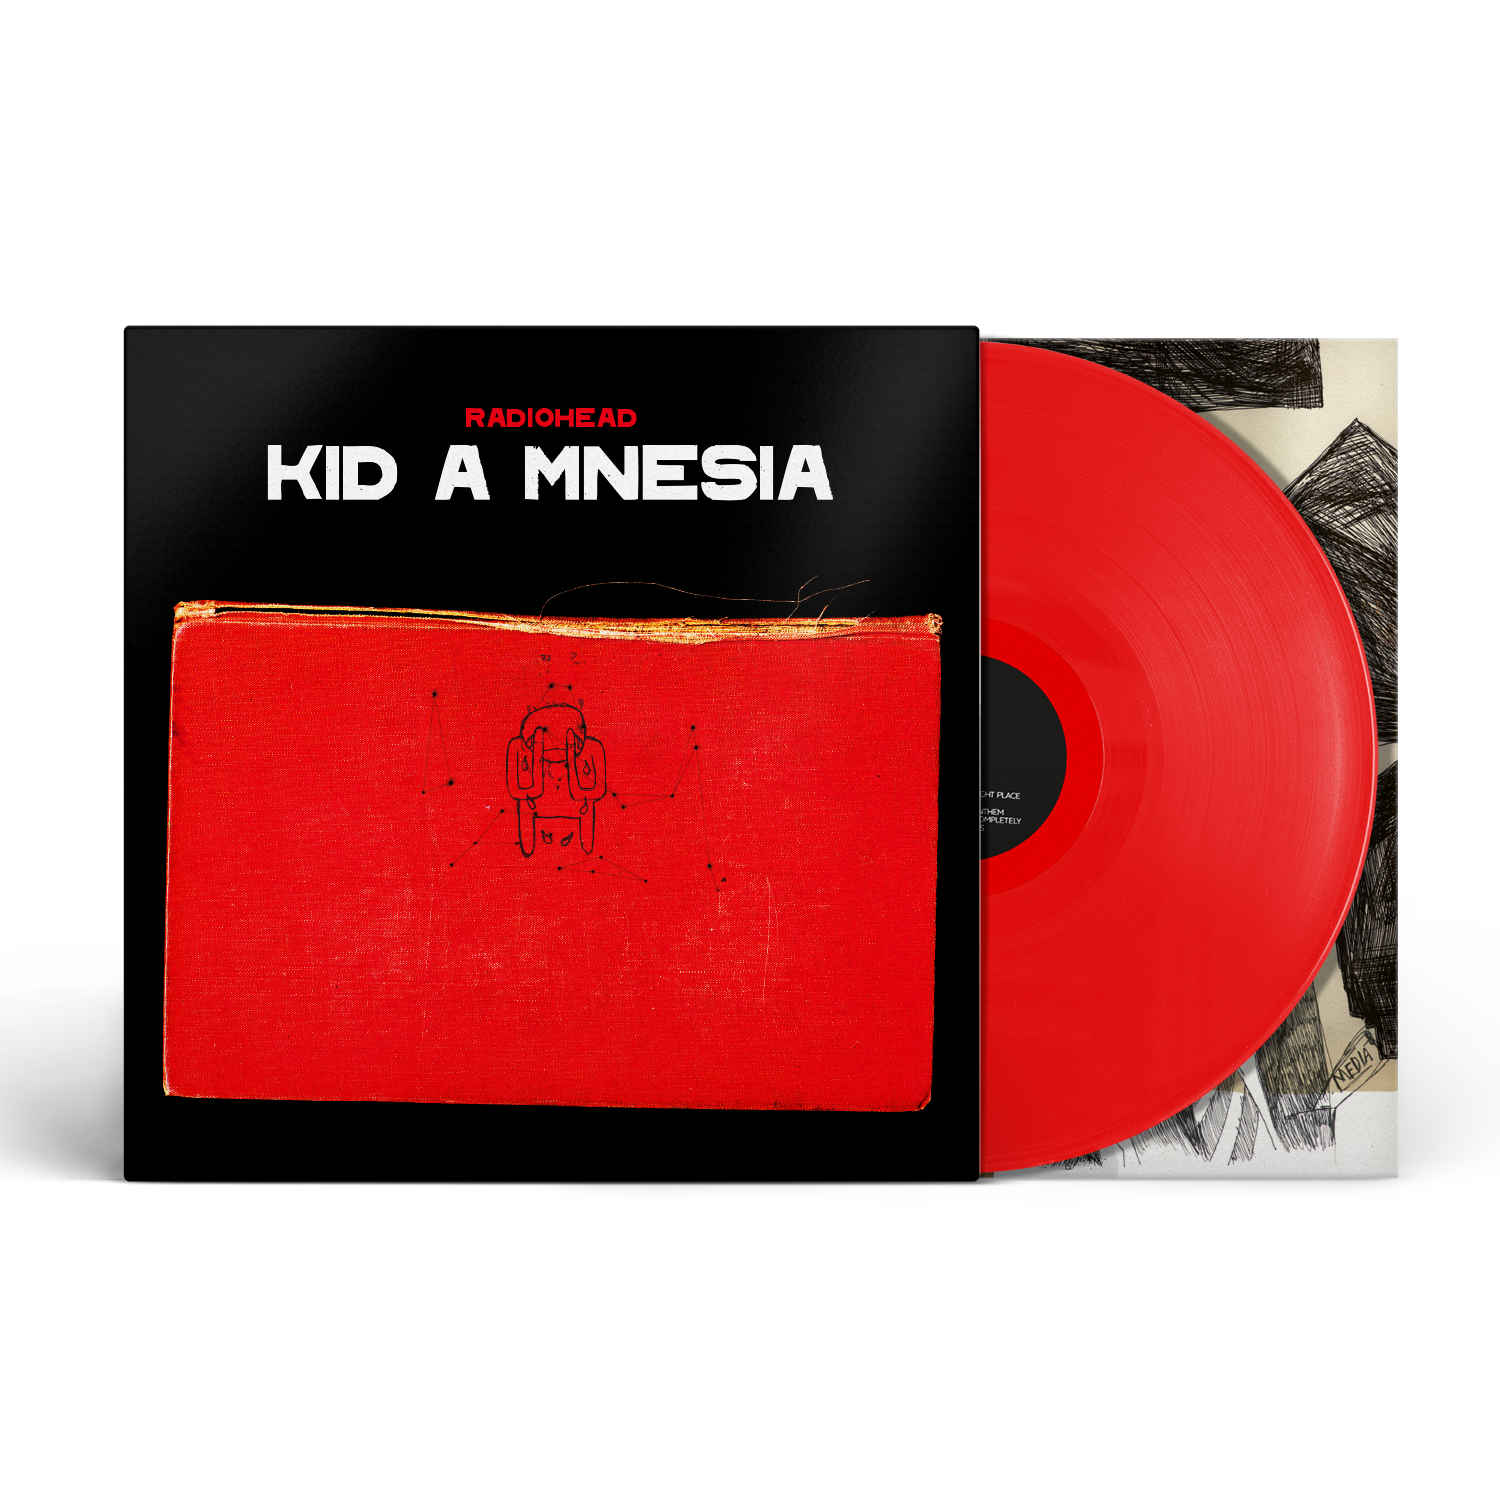 Radiohead - KID A MNESIA (Half Speed Master: Limited Edition Indies 3LP Red Vinyl)